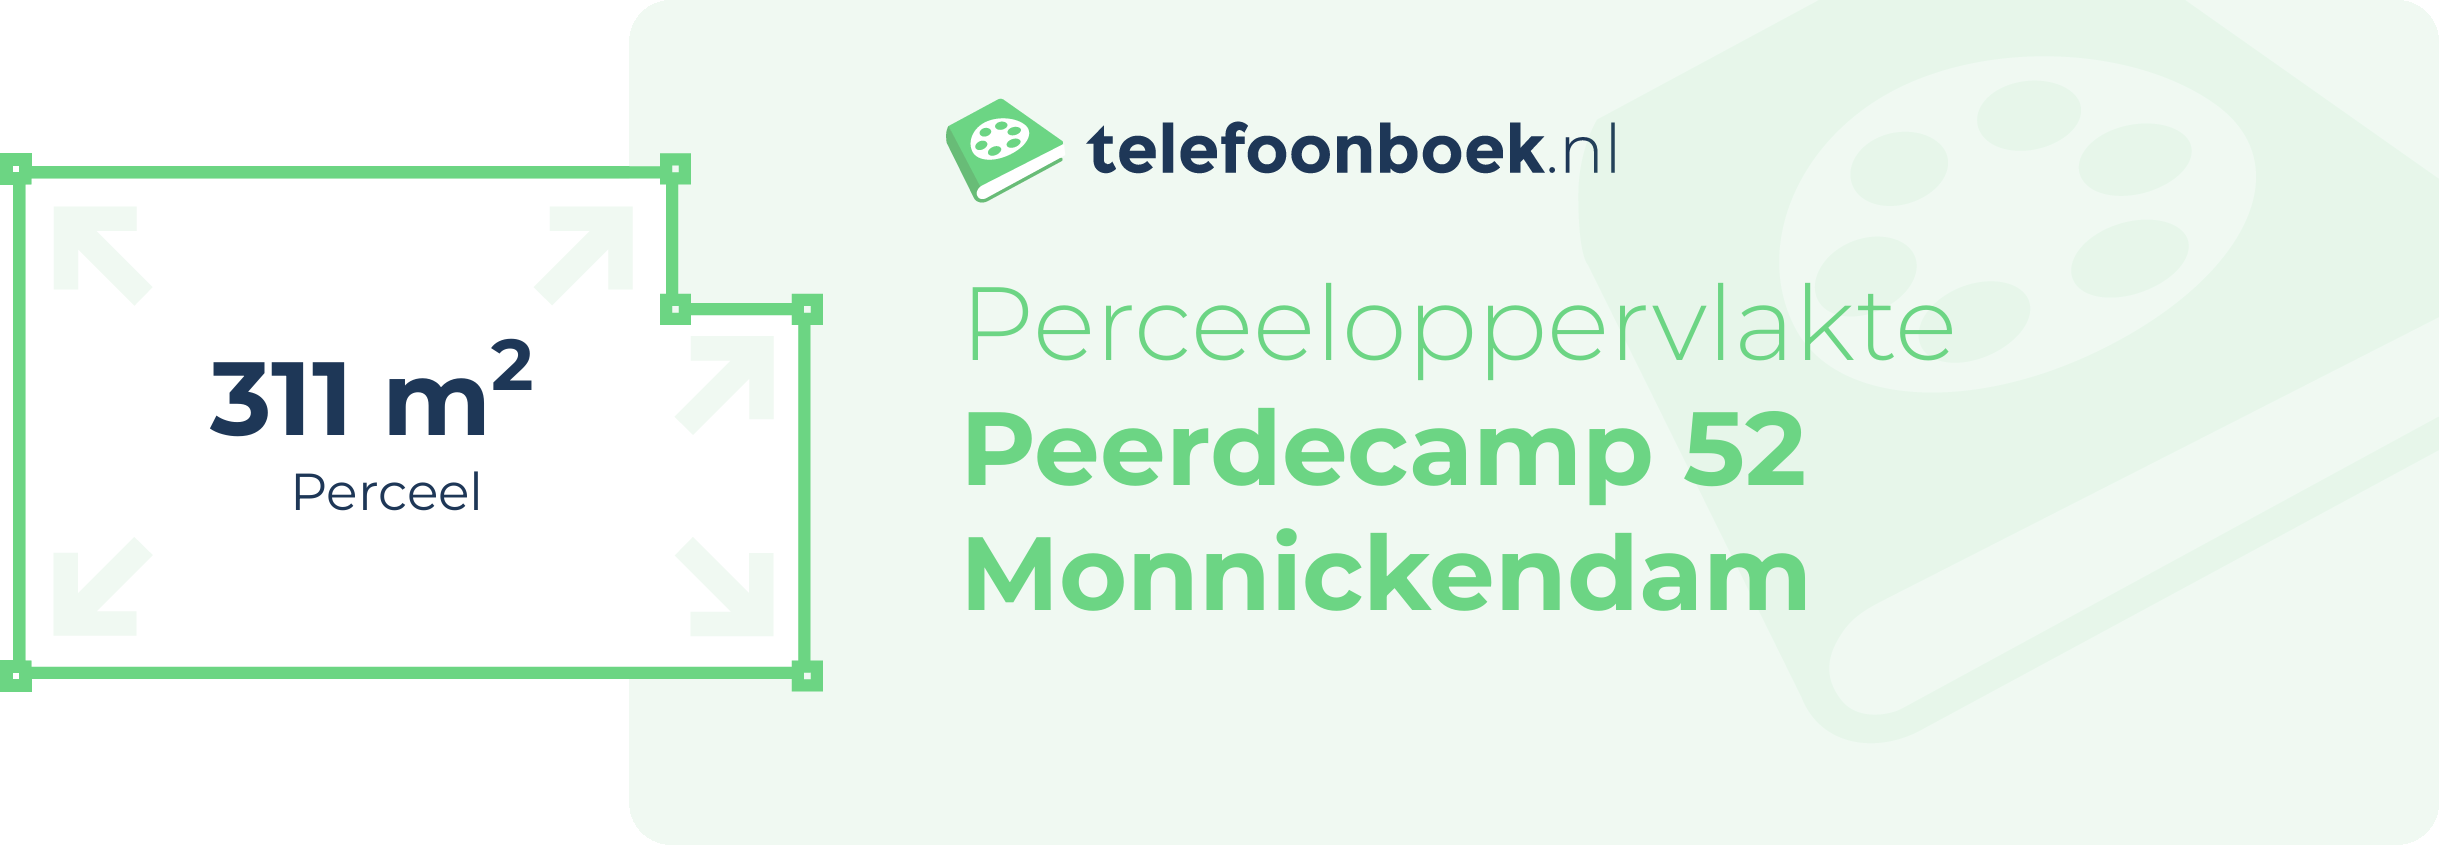 Perceeloppervlakte Peerdecamp 52 Monnickendam